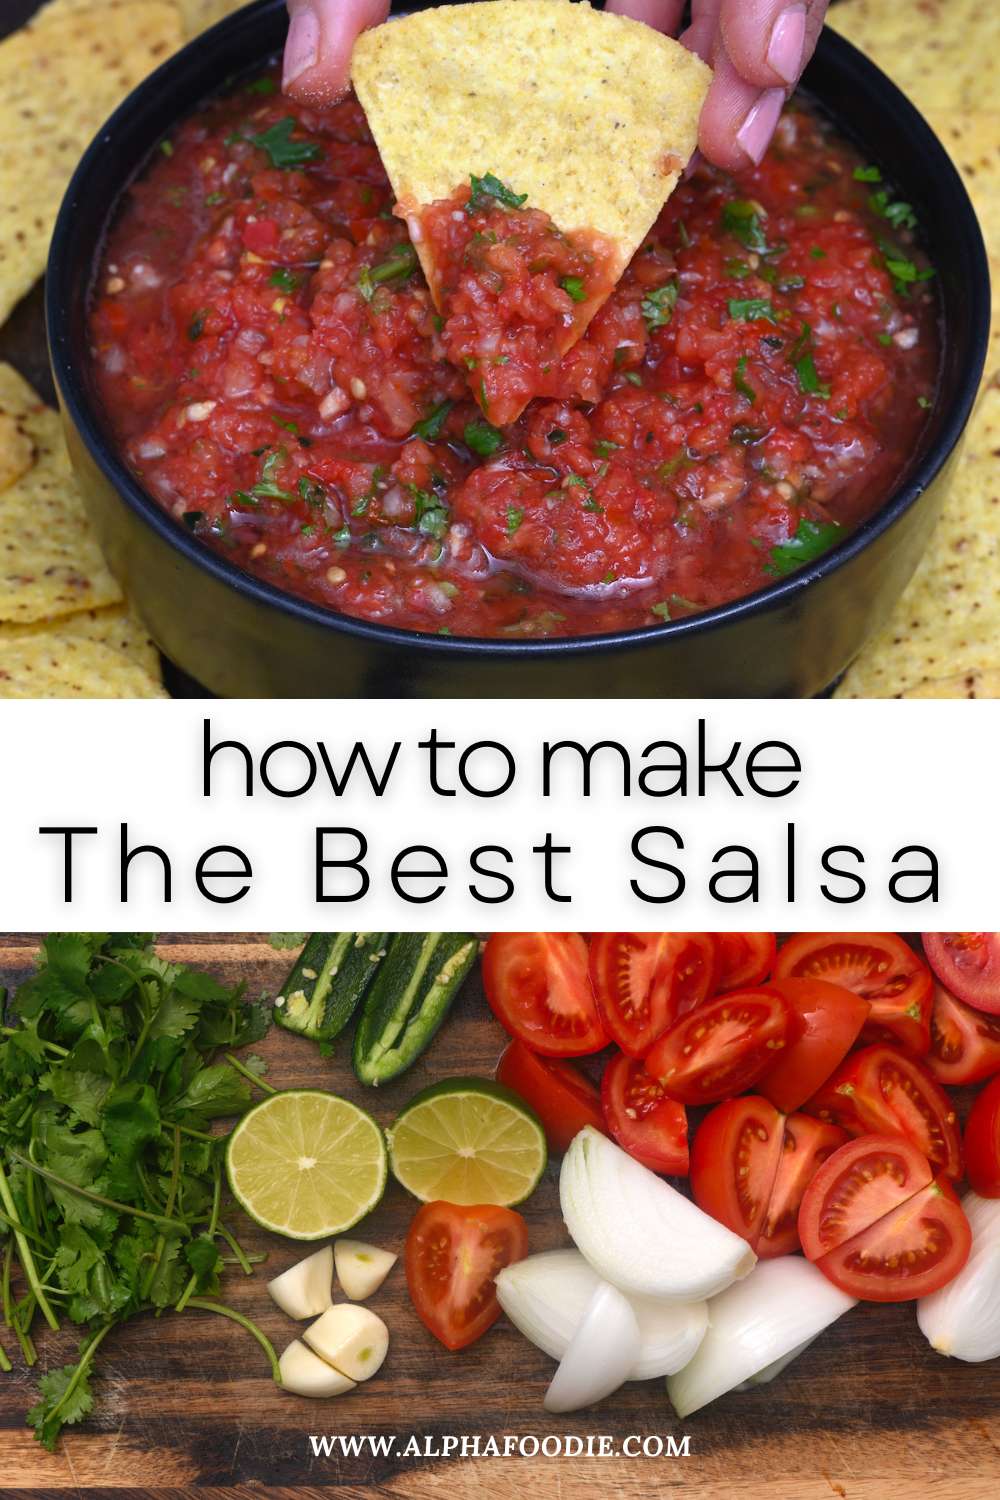 Quick & Easy Homemade Salsa - Alphafoodie